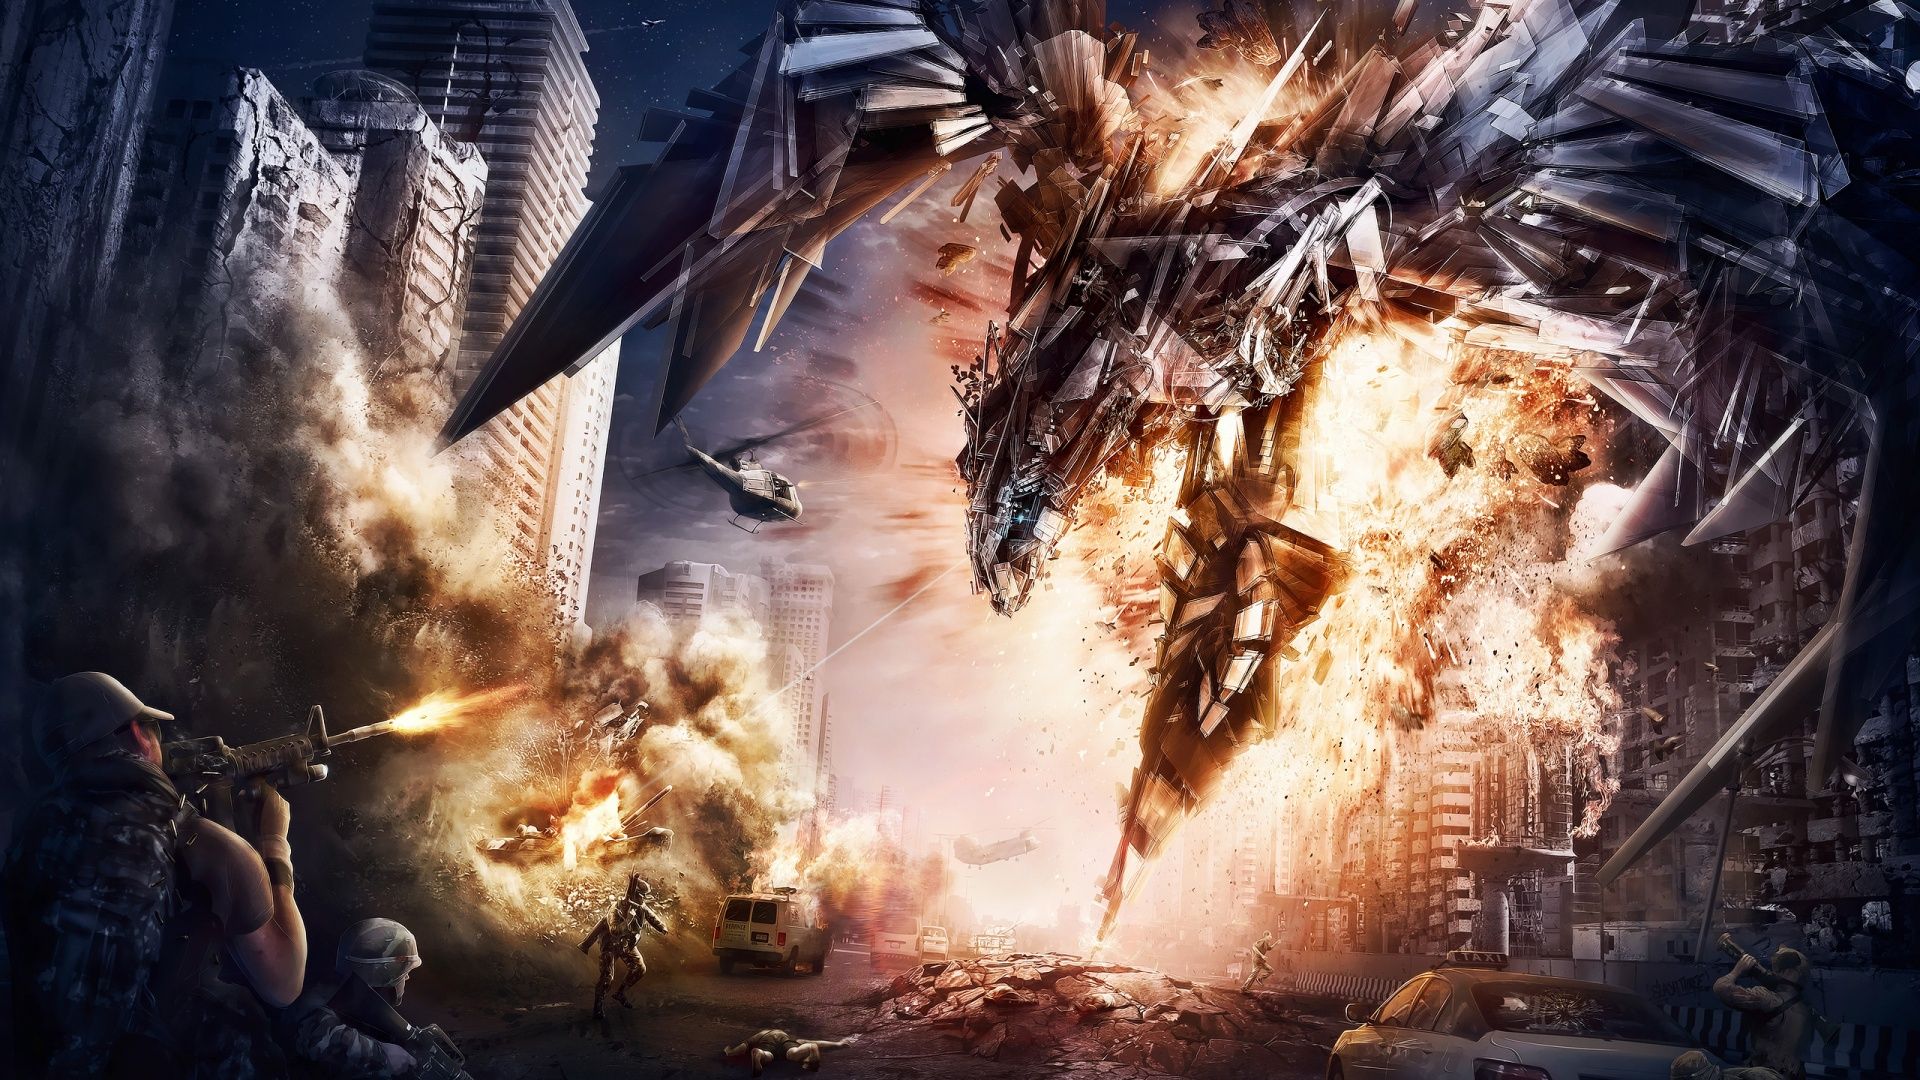 Transformers 4 Artwork Wallpaper in jpg format for free download